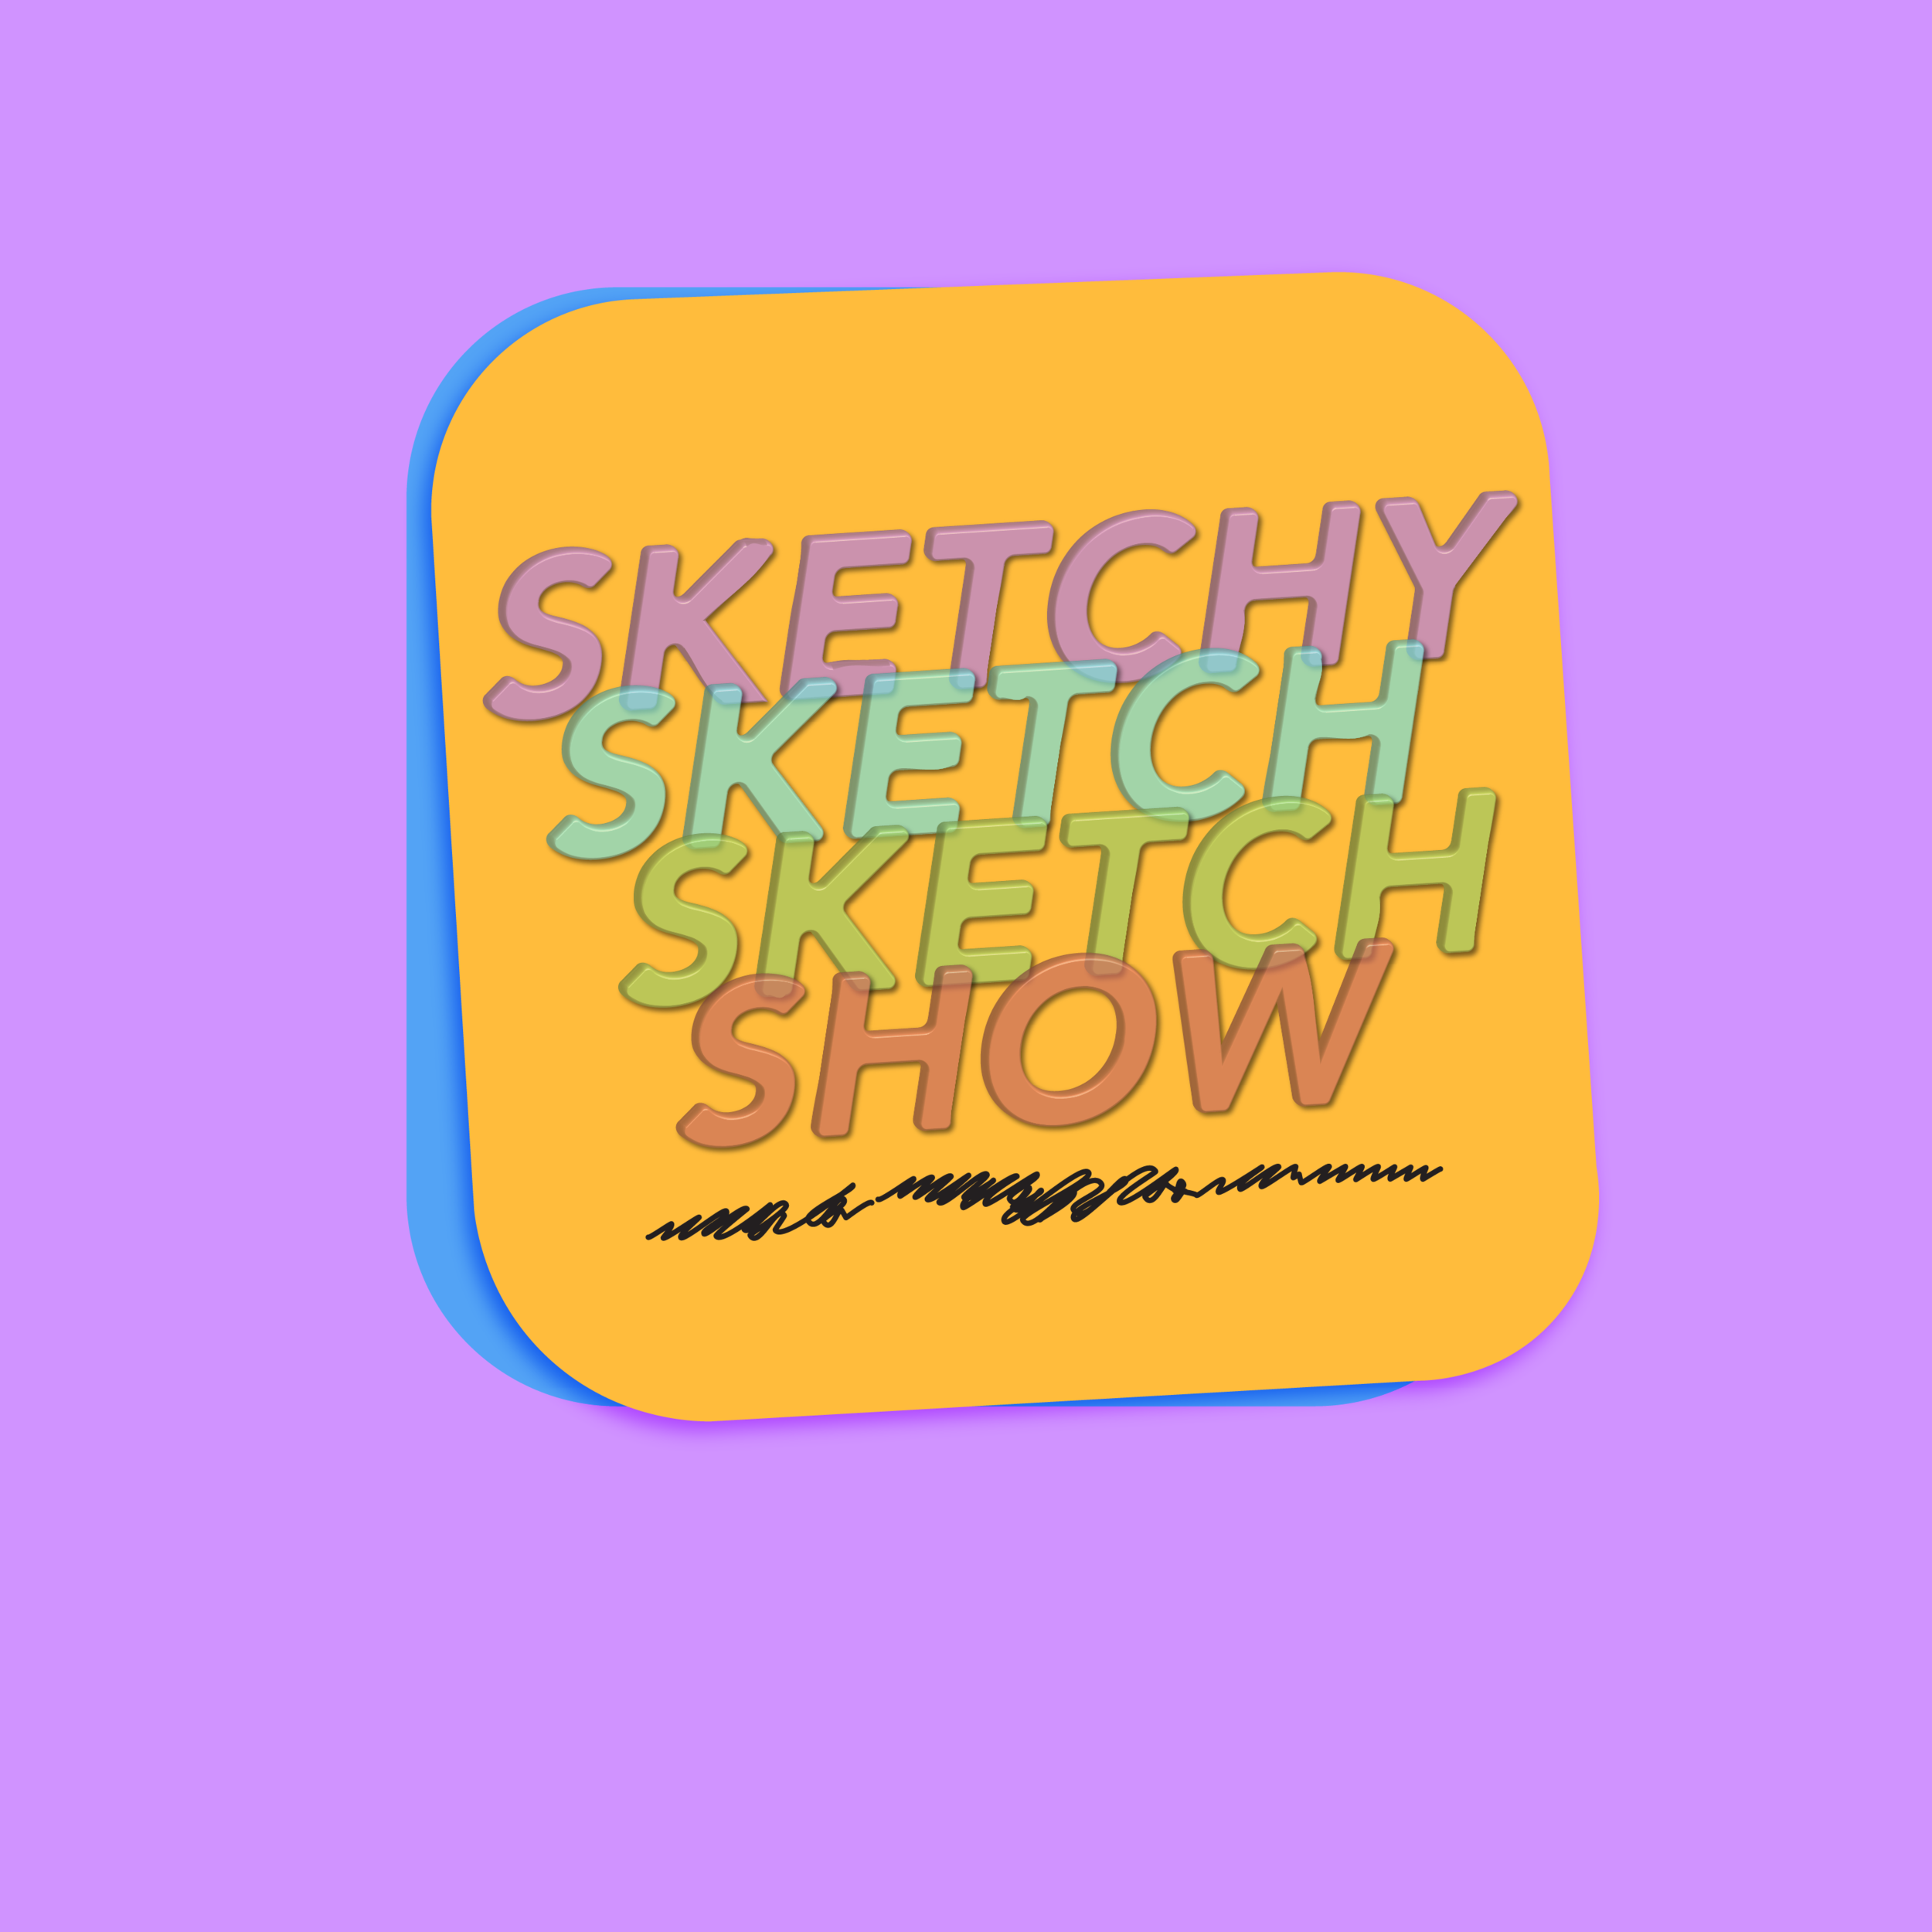 SketchySketchSketchShow